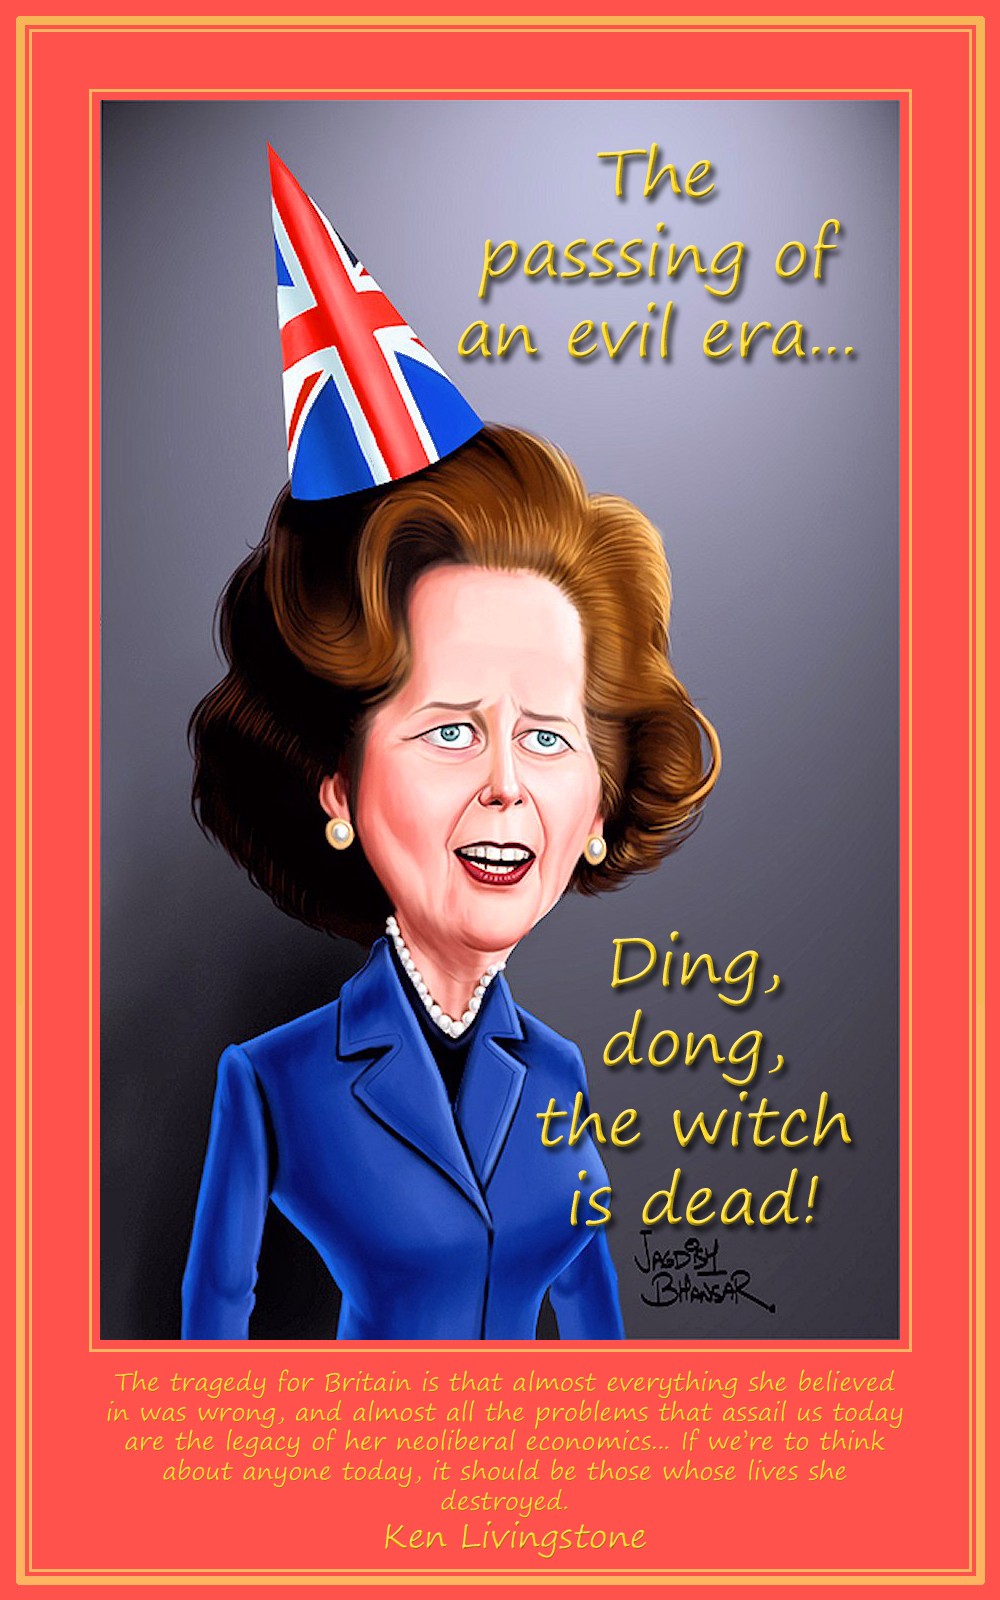 00 Margaret Thatcher caricature. 09.04.13